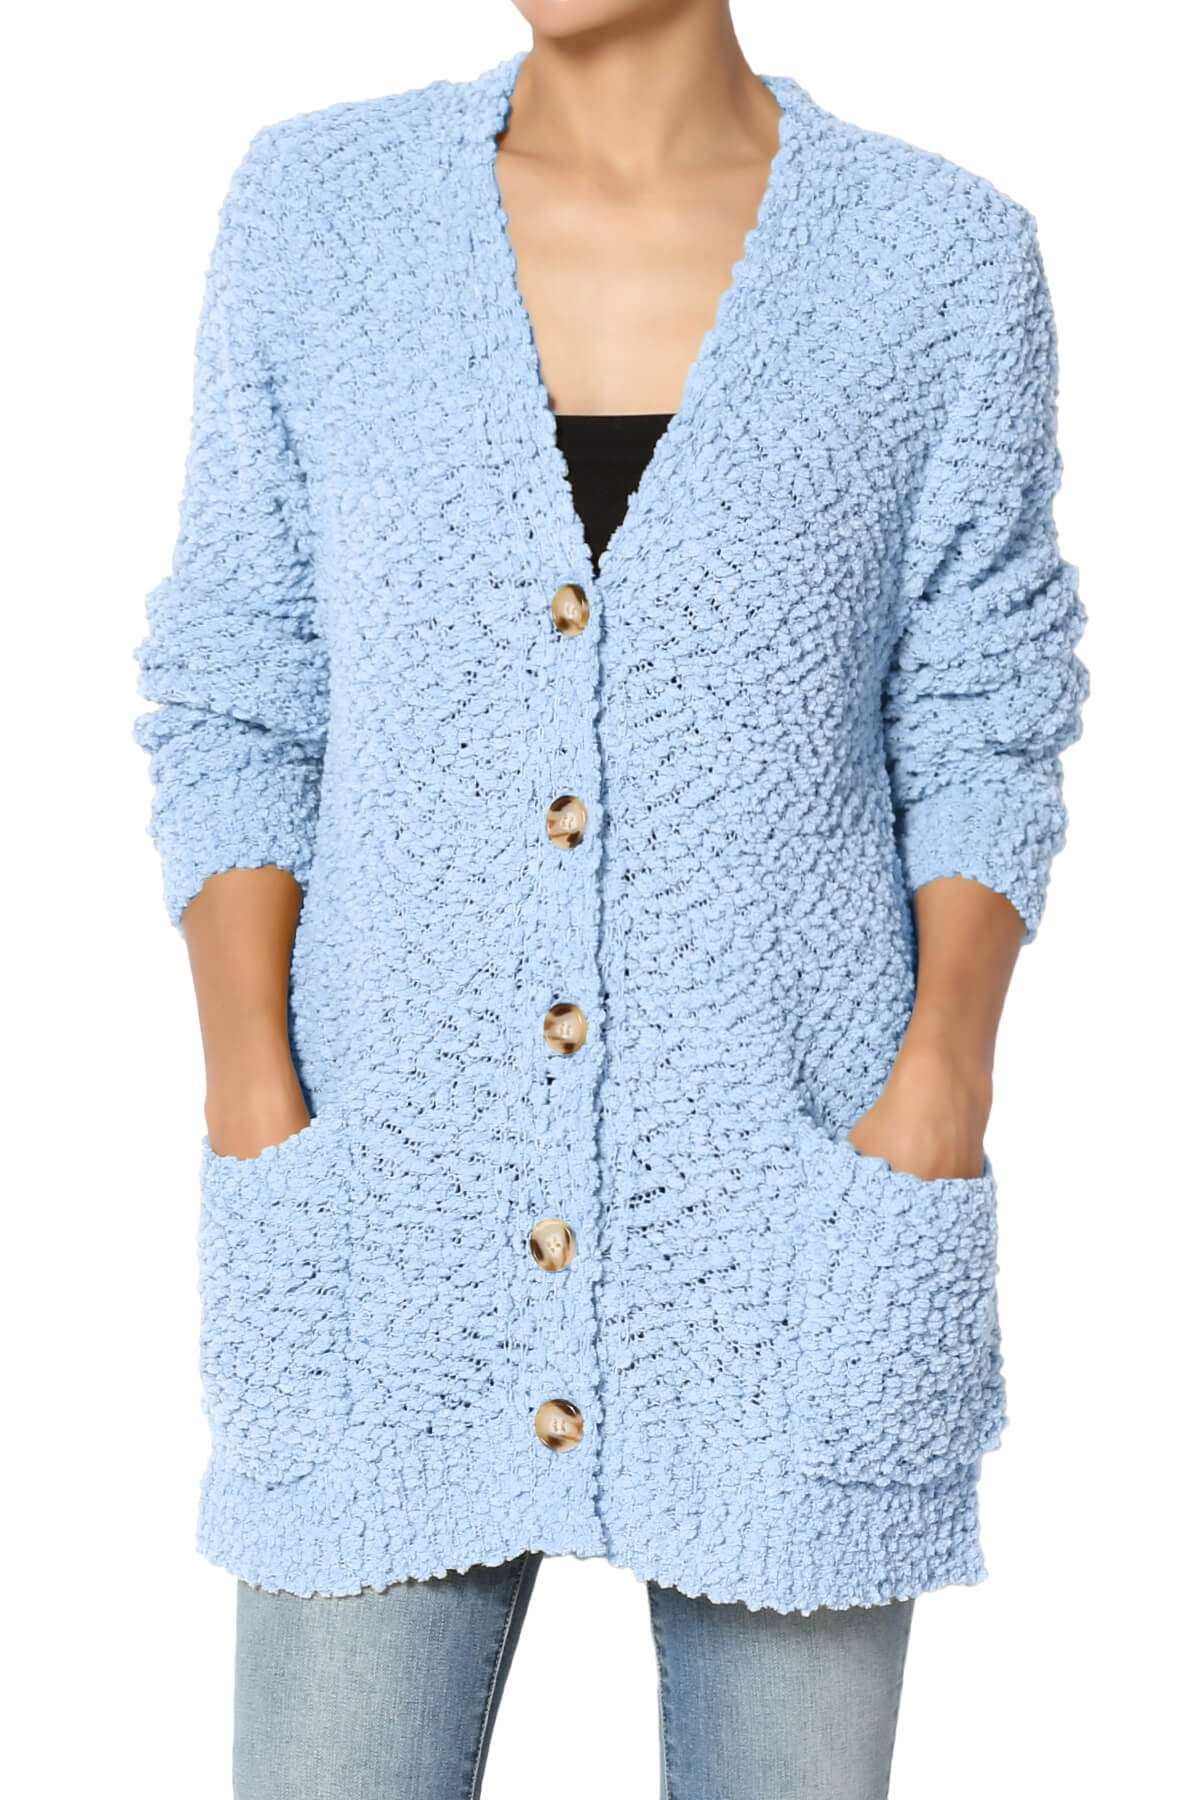 Themogan Womens S3x Cozy Button Down V Neck Teddy Knit Sweater